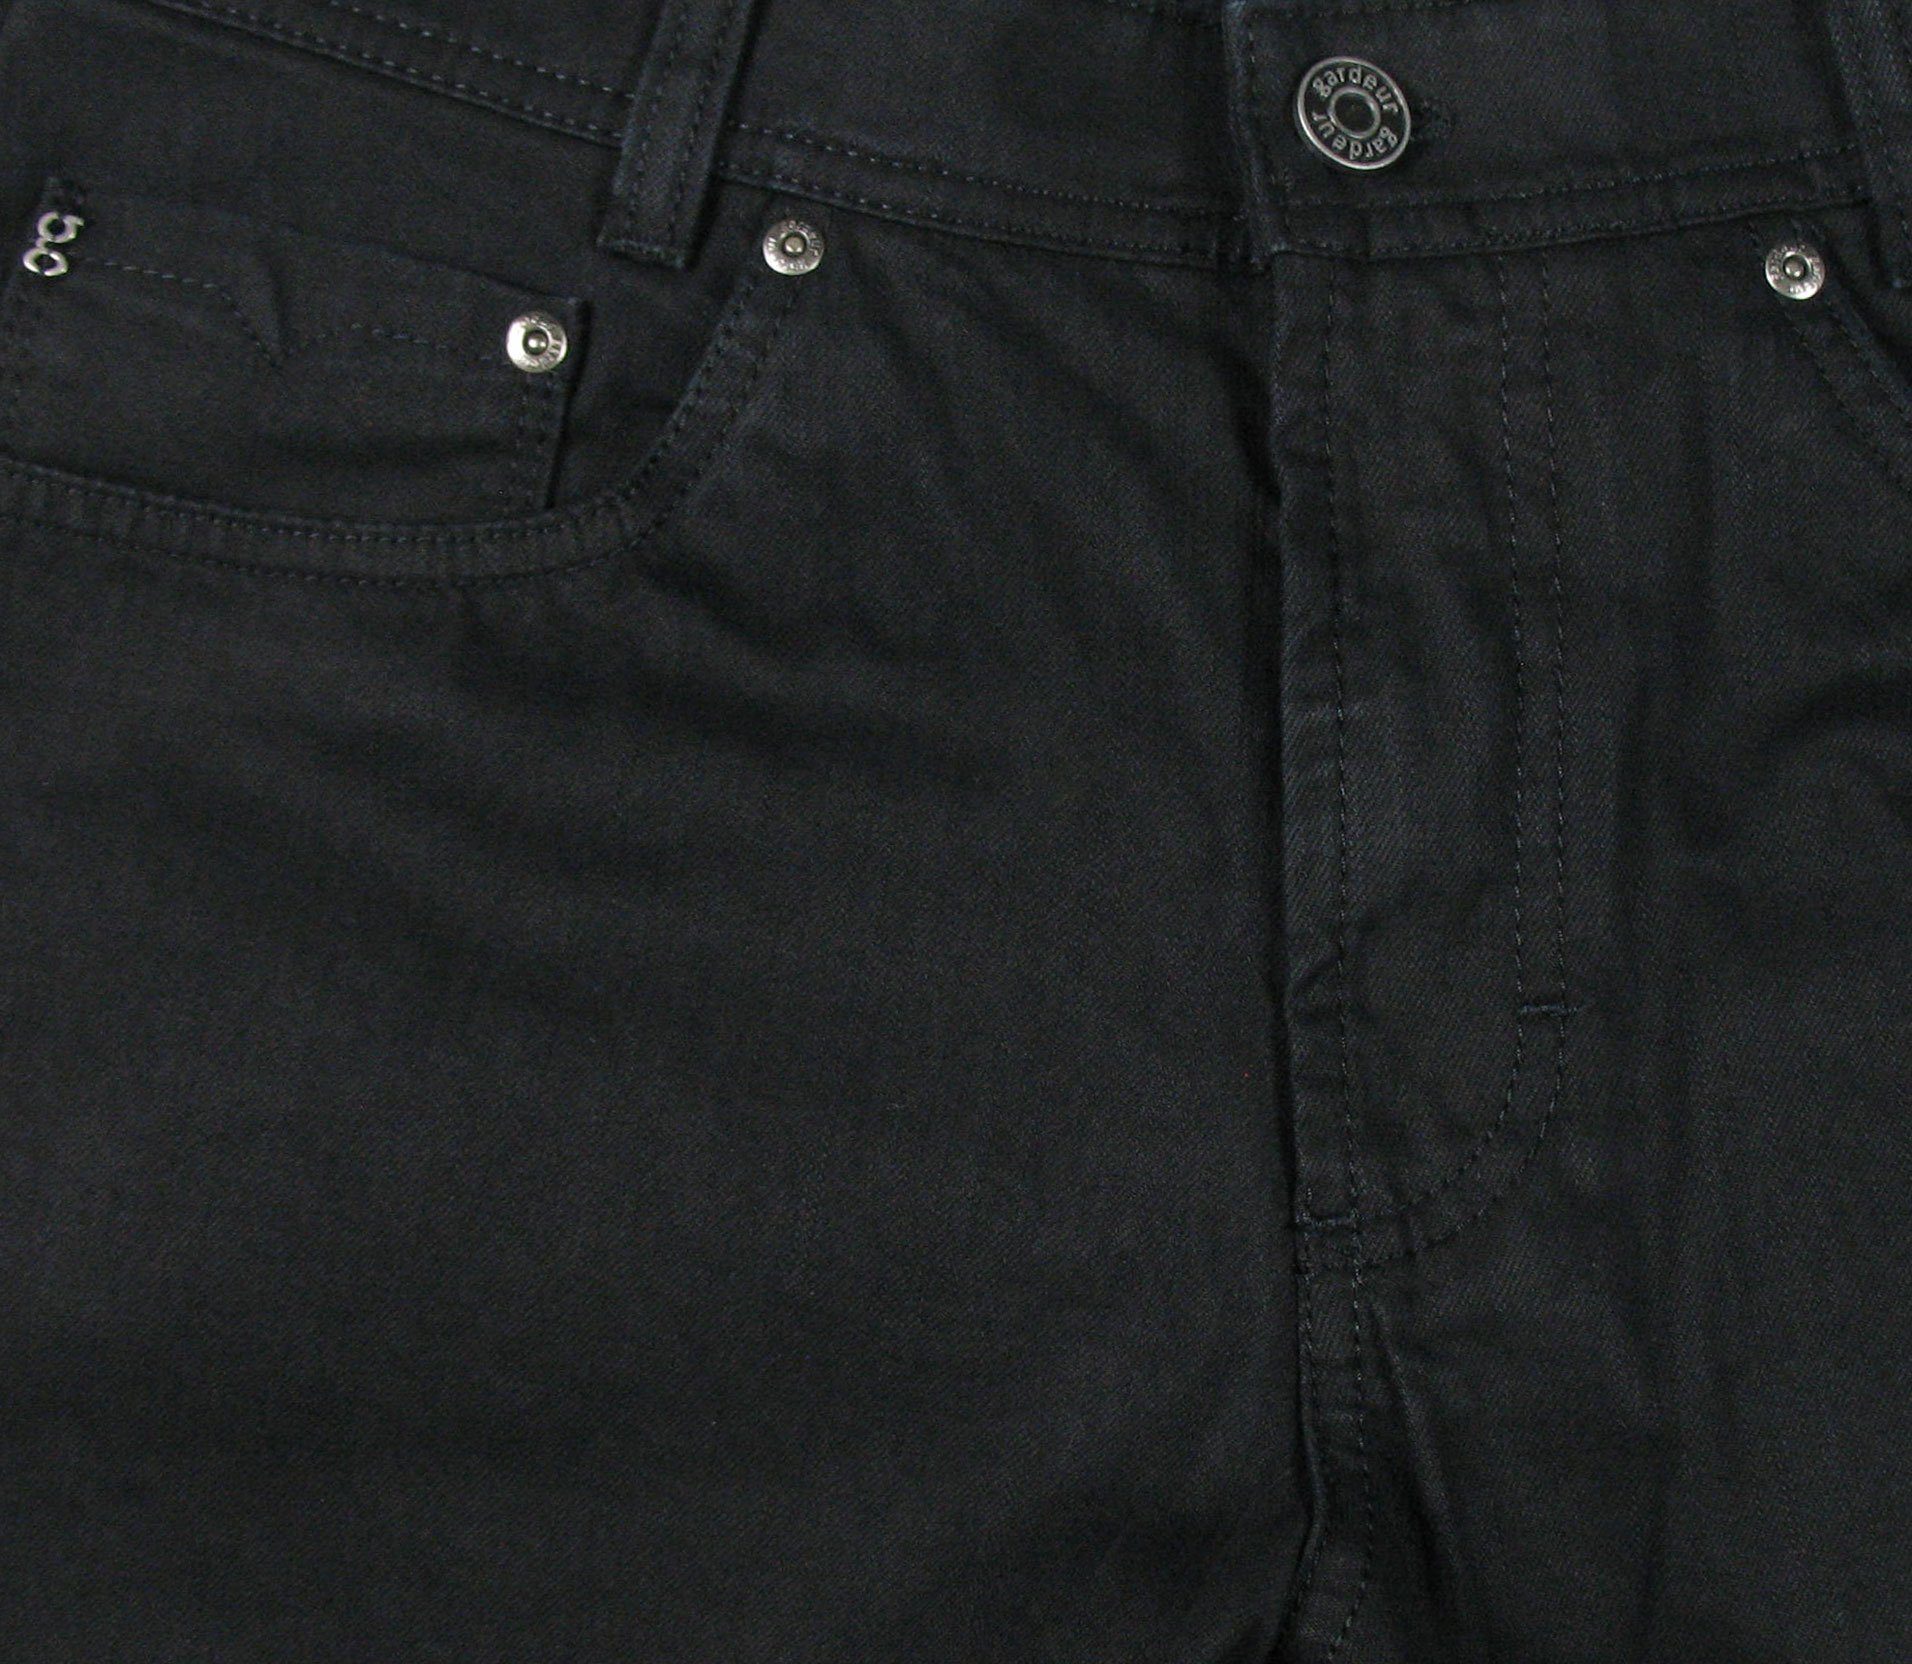 Atelier Denim Nevio Black/Black Regular GARDEUR 5-Pocket-Jeans Stretch-Denim Fit